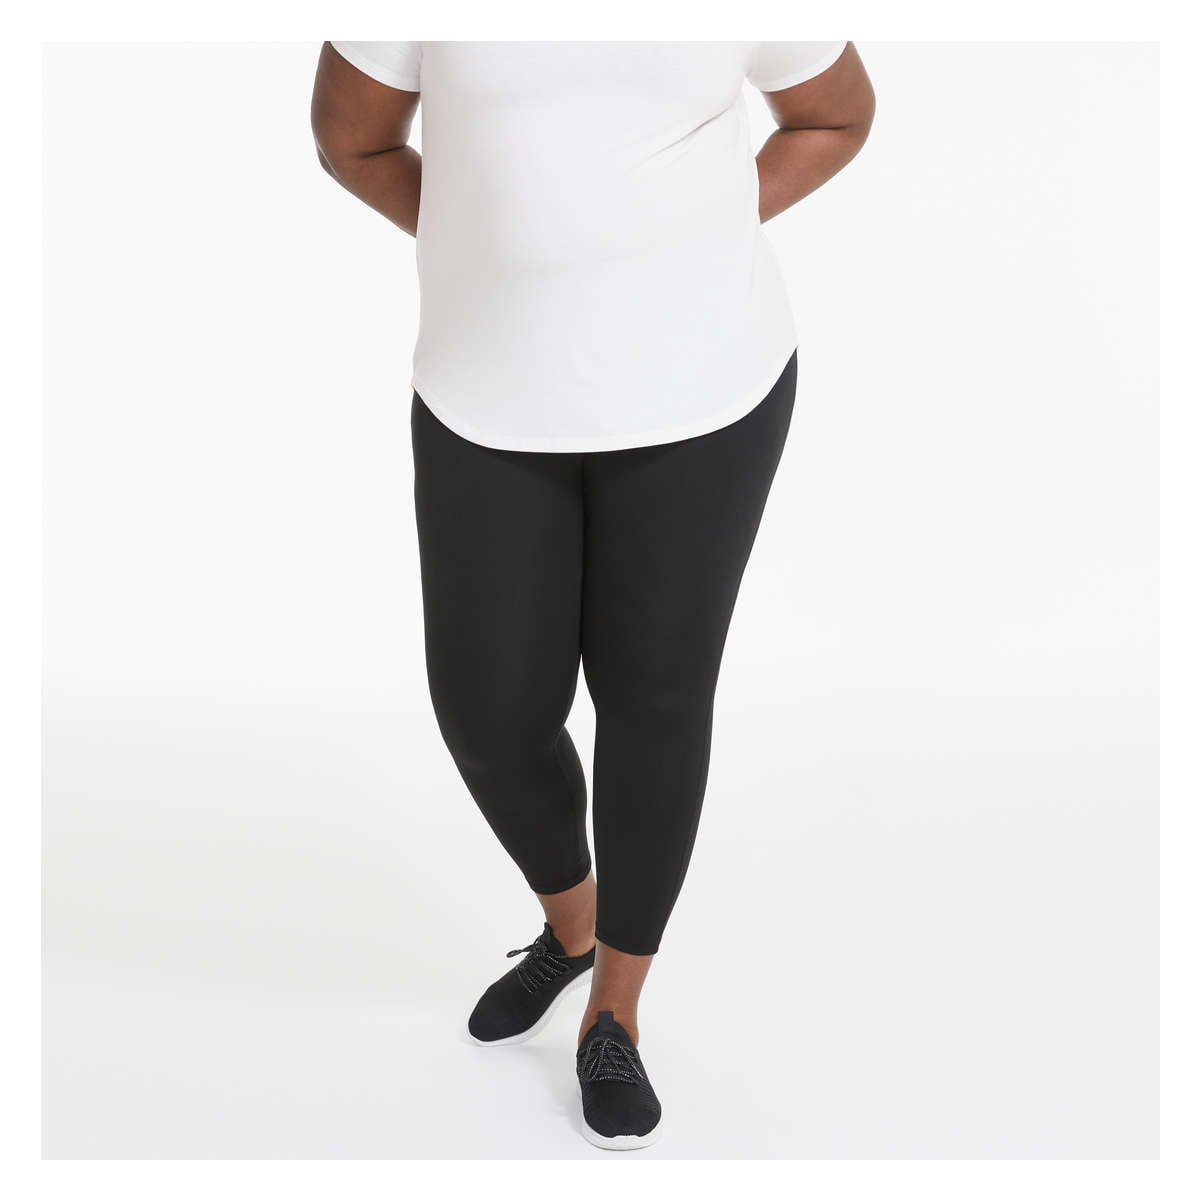 Adult Big Hole Footless Woman Leggings Black, $18.99